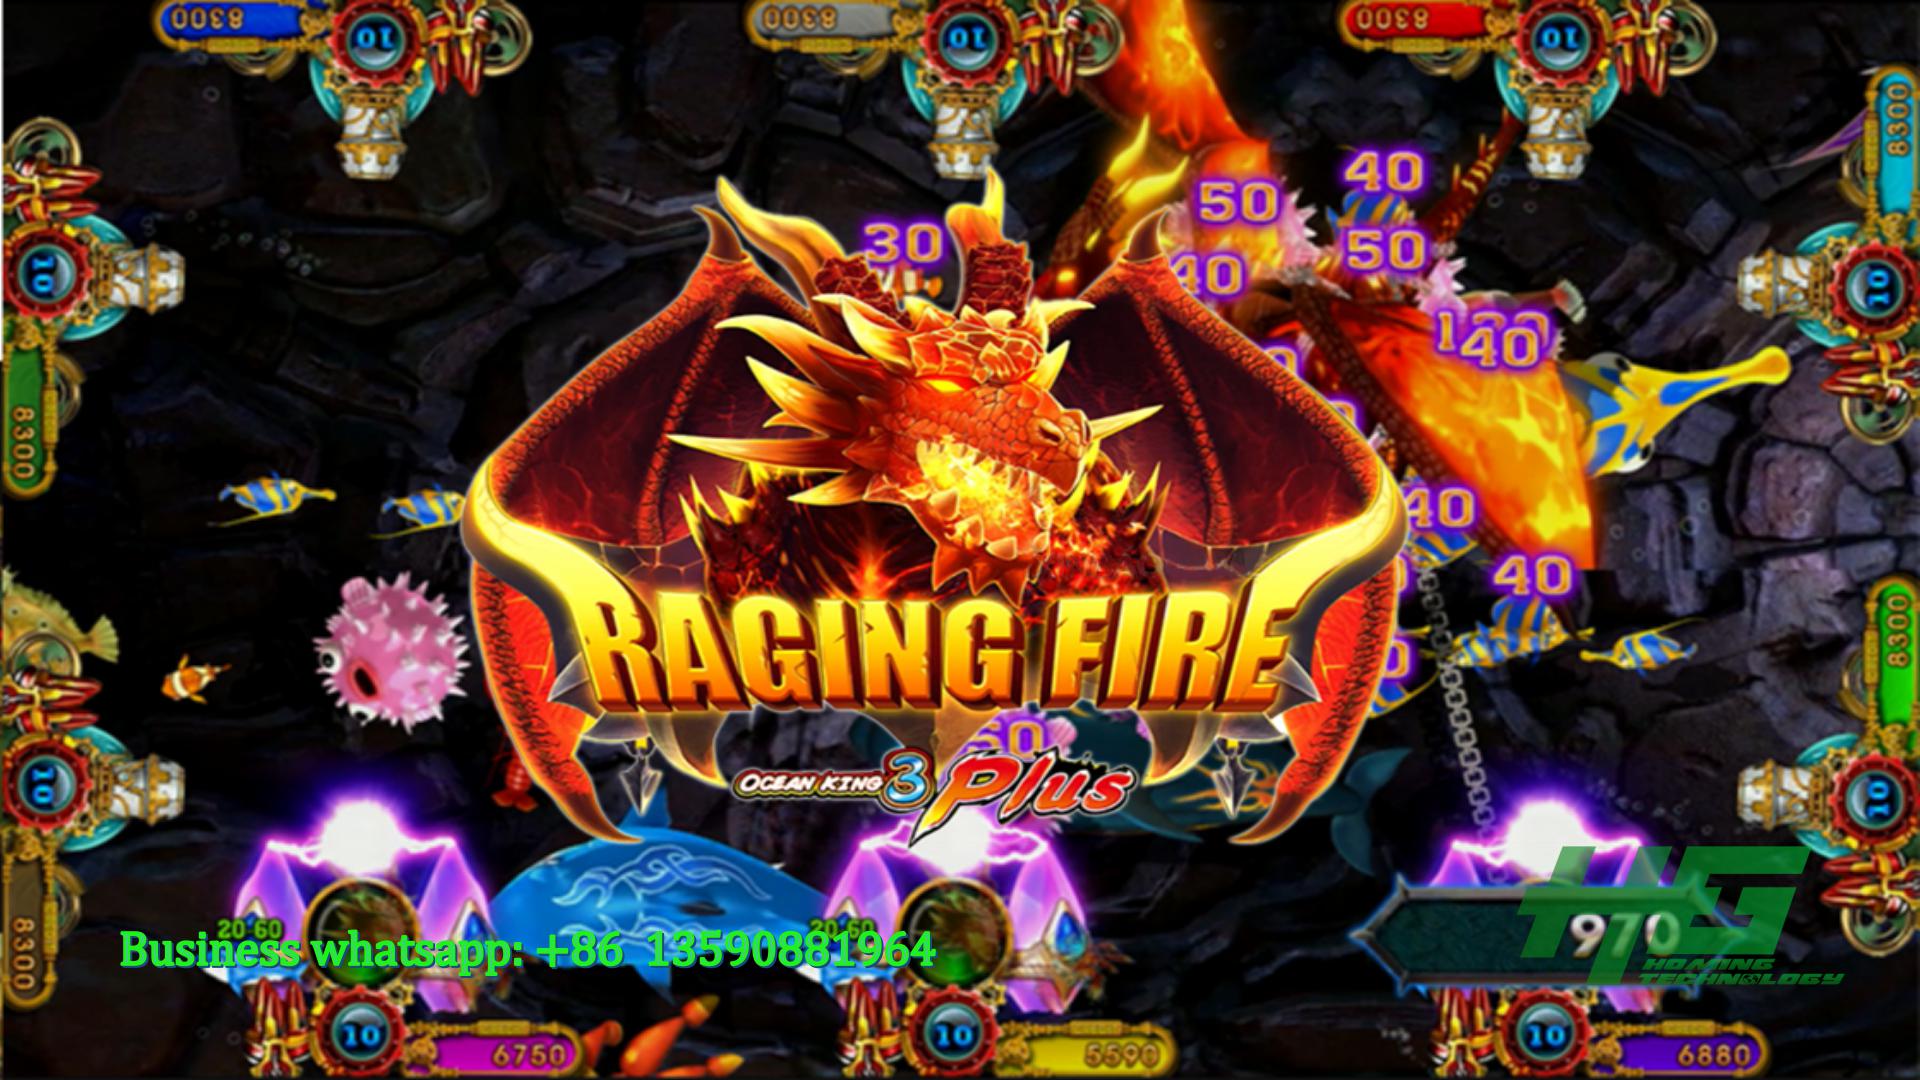 IGS Original Ocean King 3 Plus Raging Fire Fishing Game,Raging Fire Fish Hunter Casino Game Machine For Sale